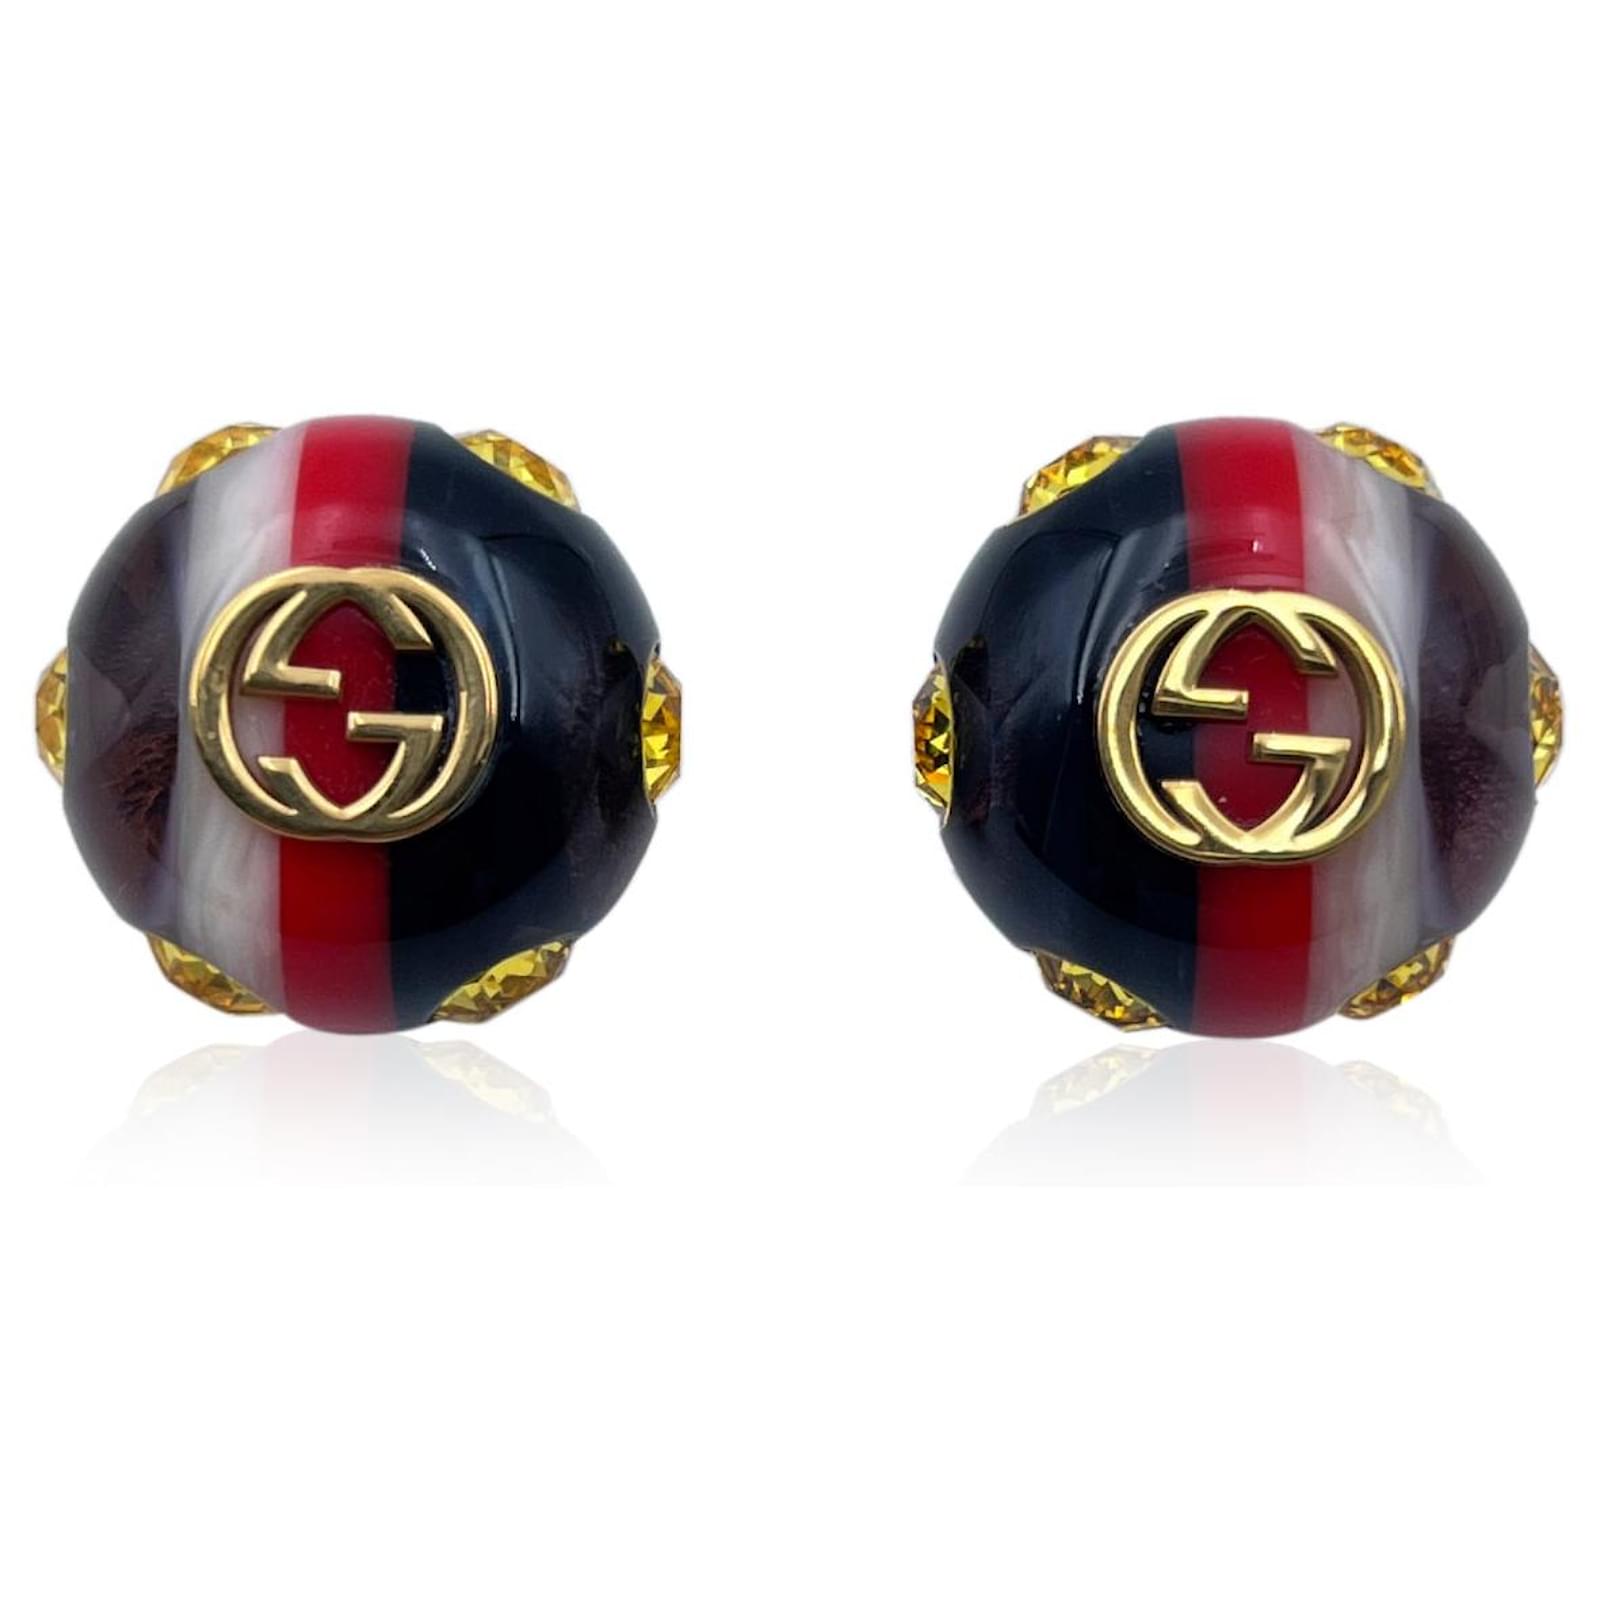 Gucci Vintage Logo Earrings